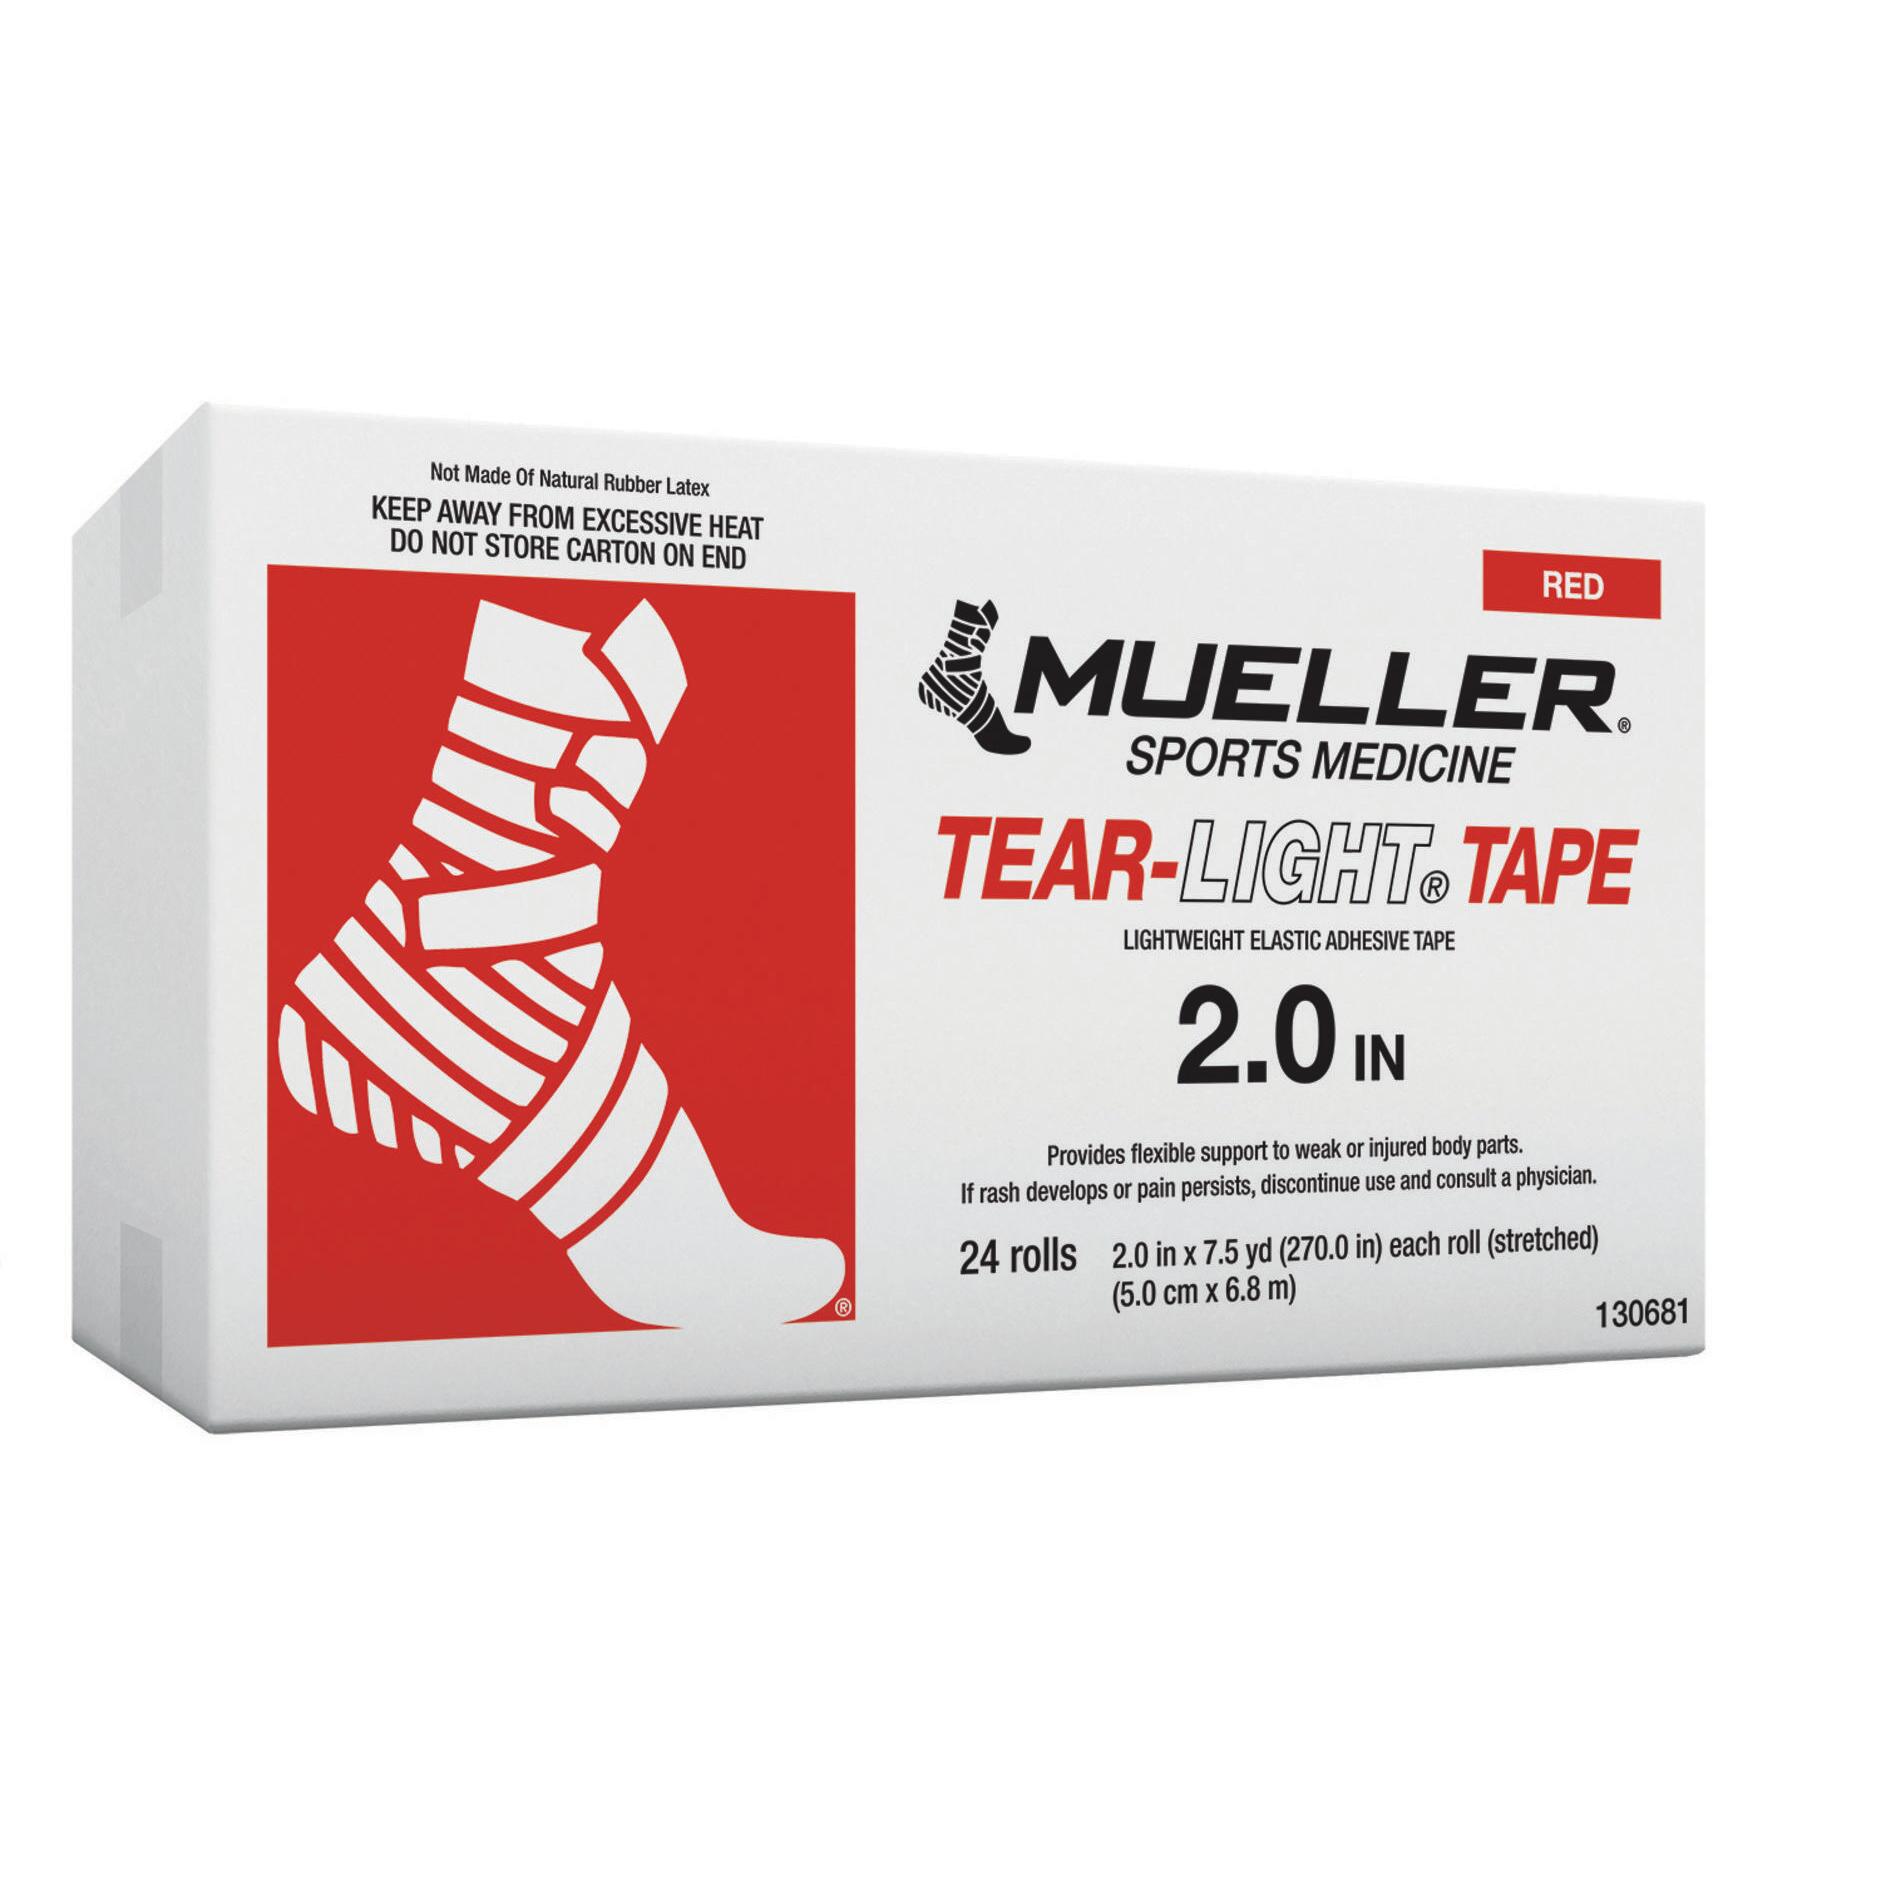 MUELLER Mueller Muscle Support Tear-Light Tape Red 5cm x 6.8m - 24 Rolls